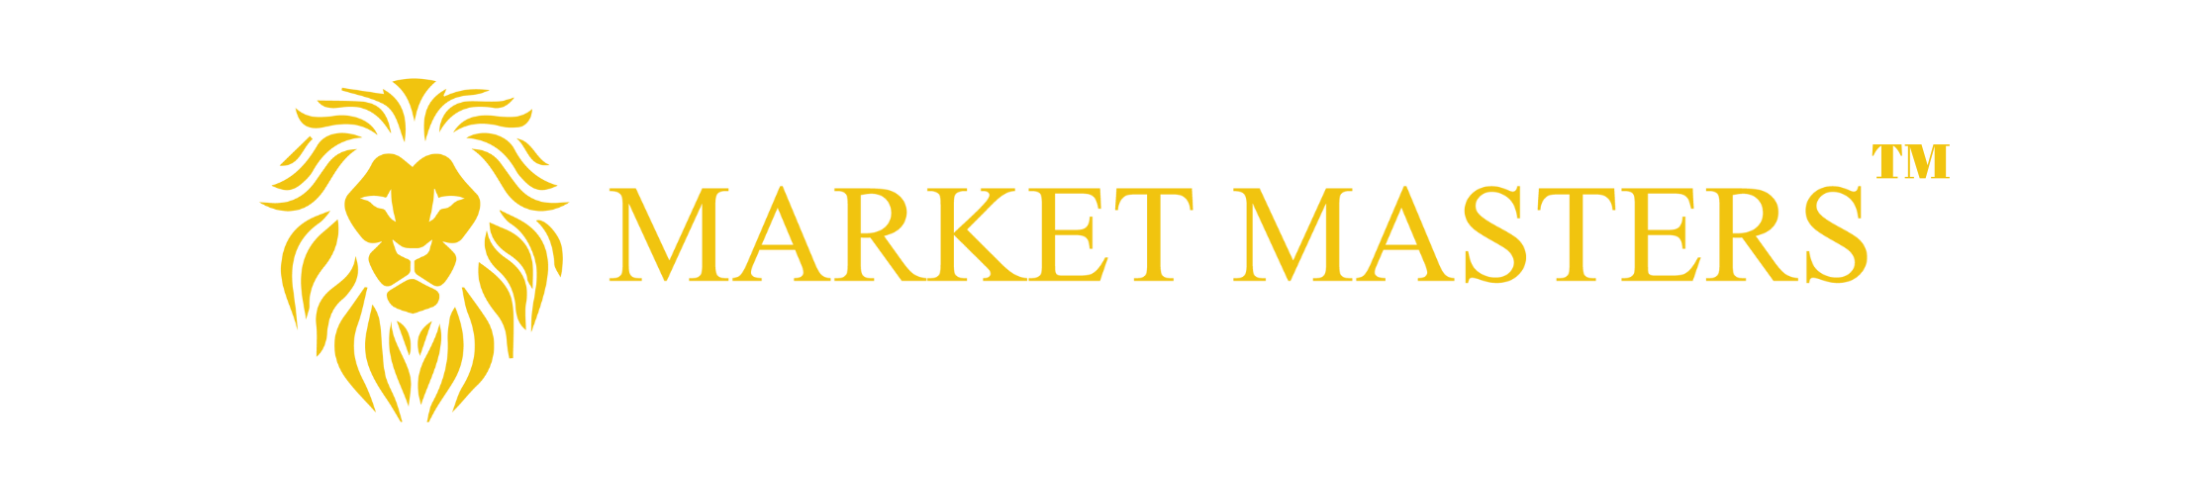 Market Masters 